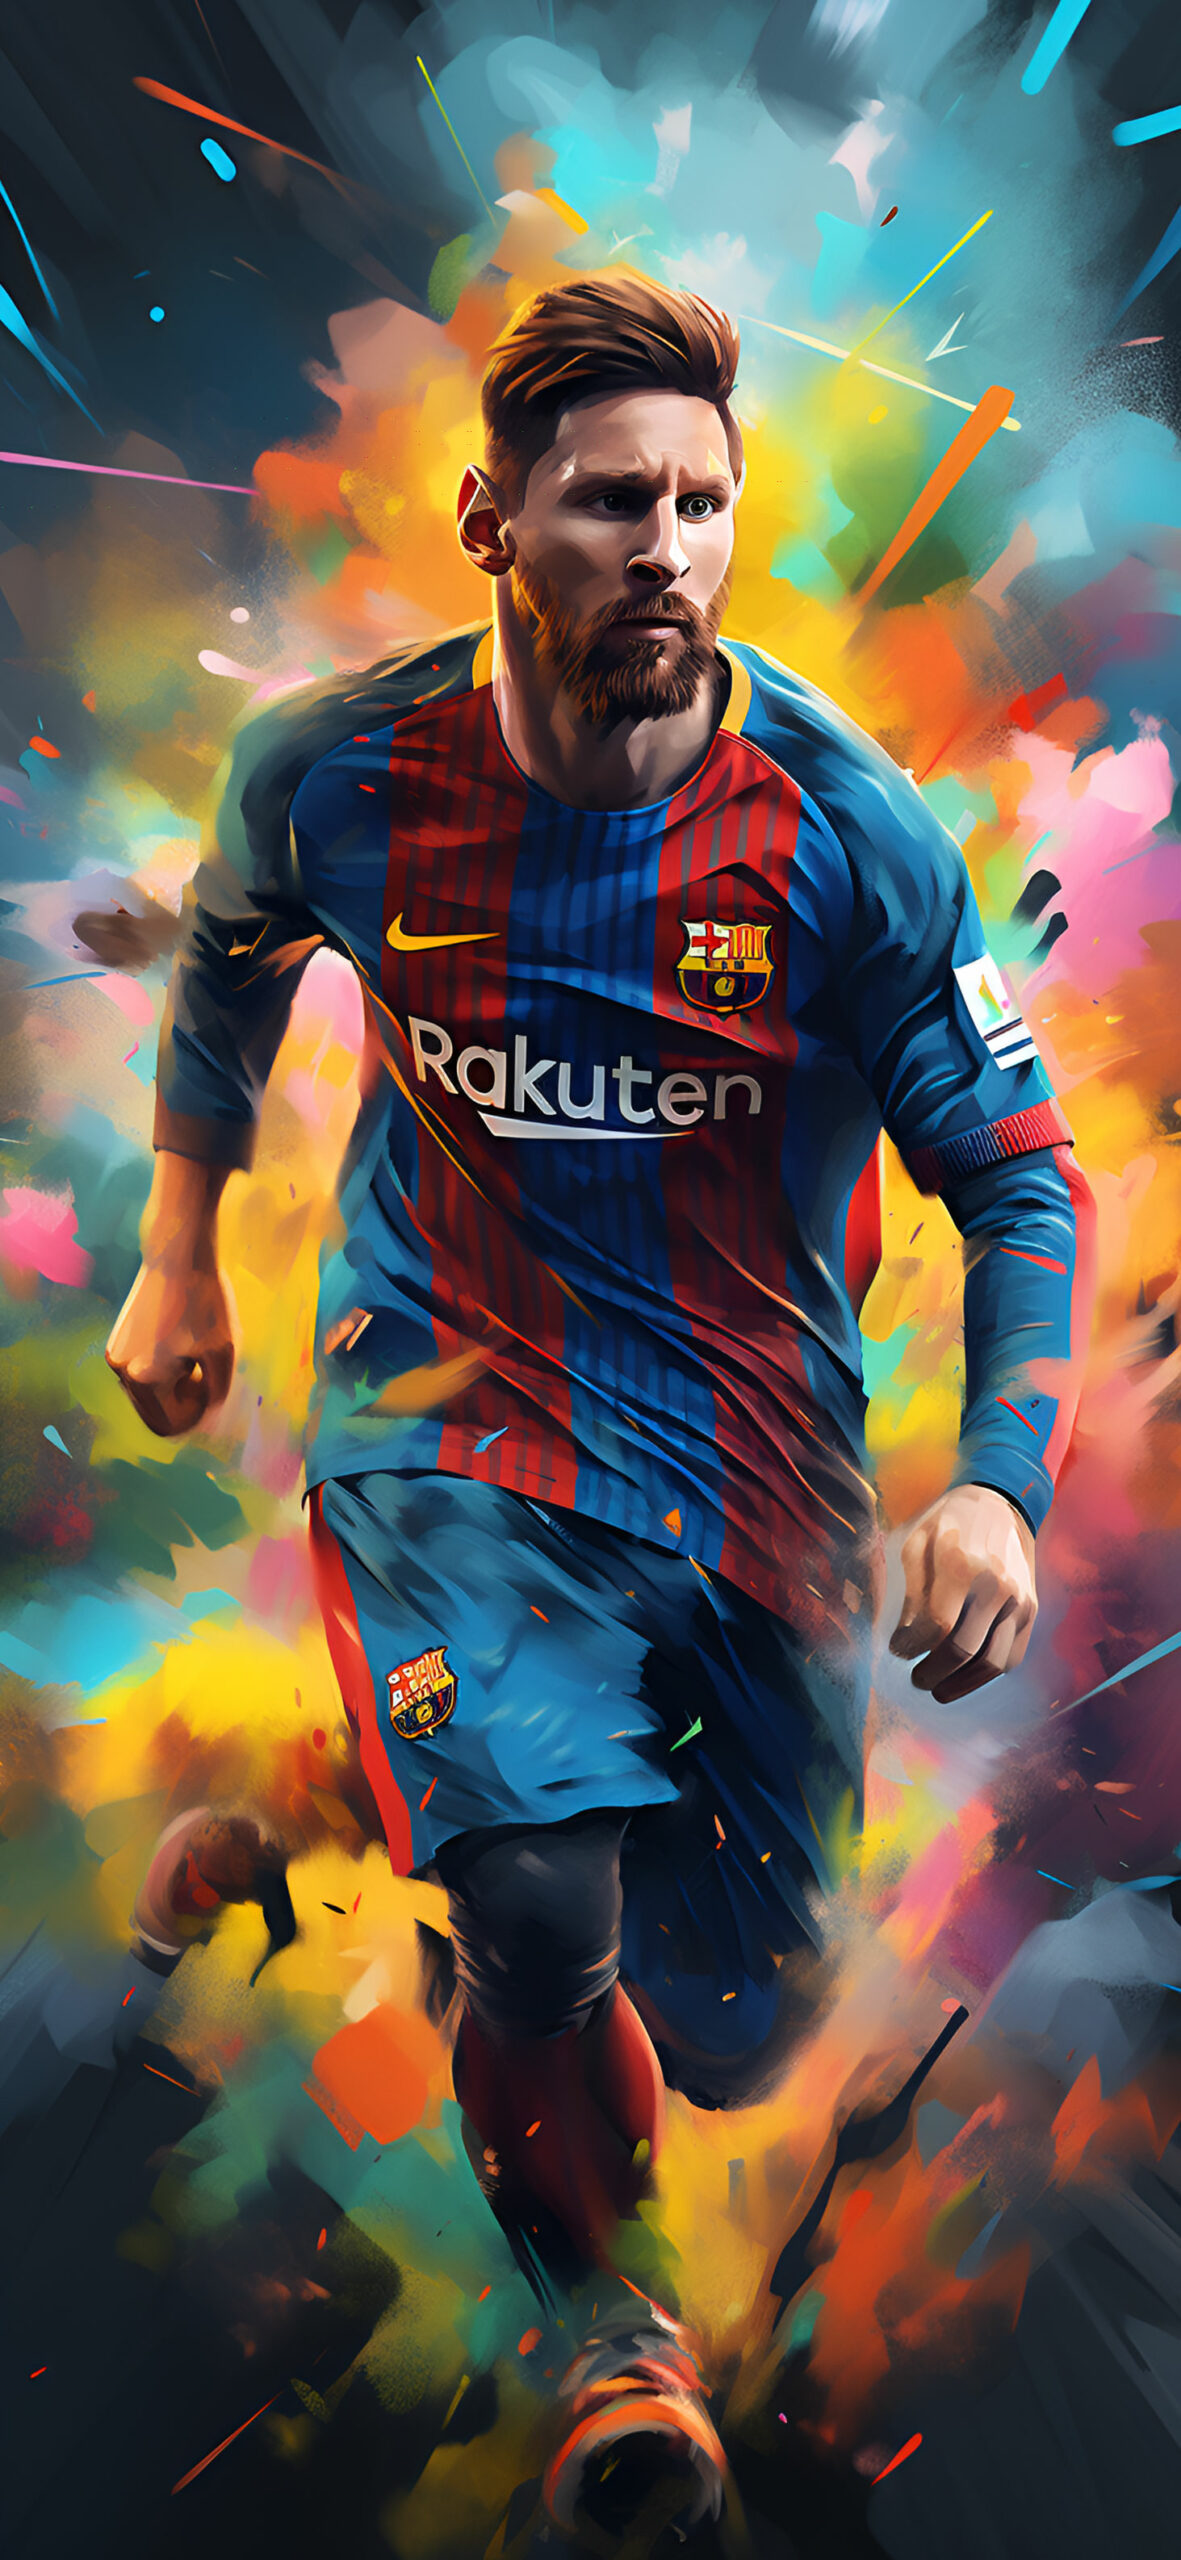 Lionel Messi in Barcelona Uniform Art Wallpaper Lionel Messi W